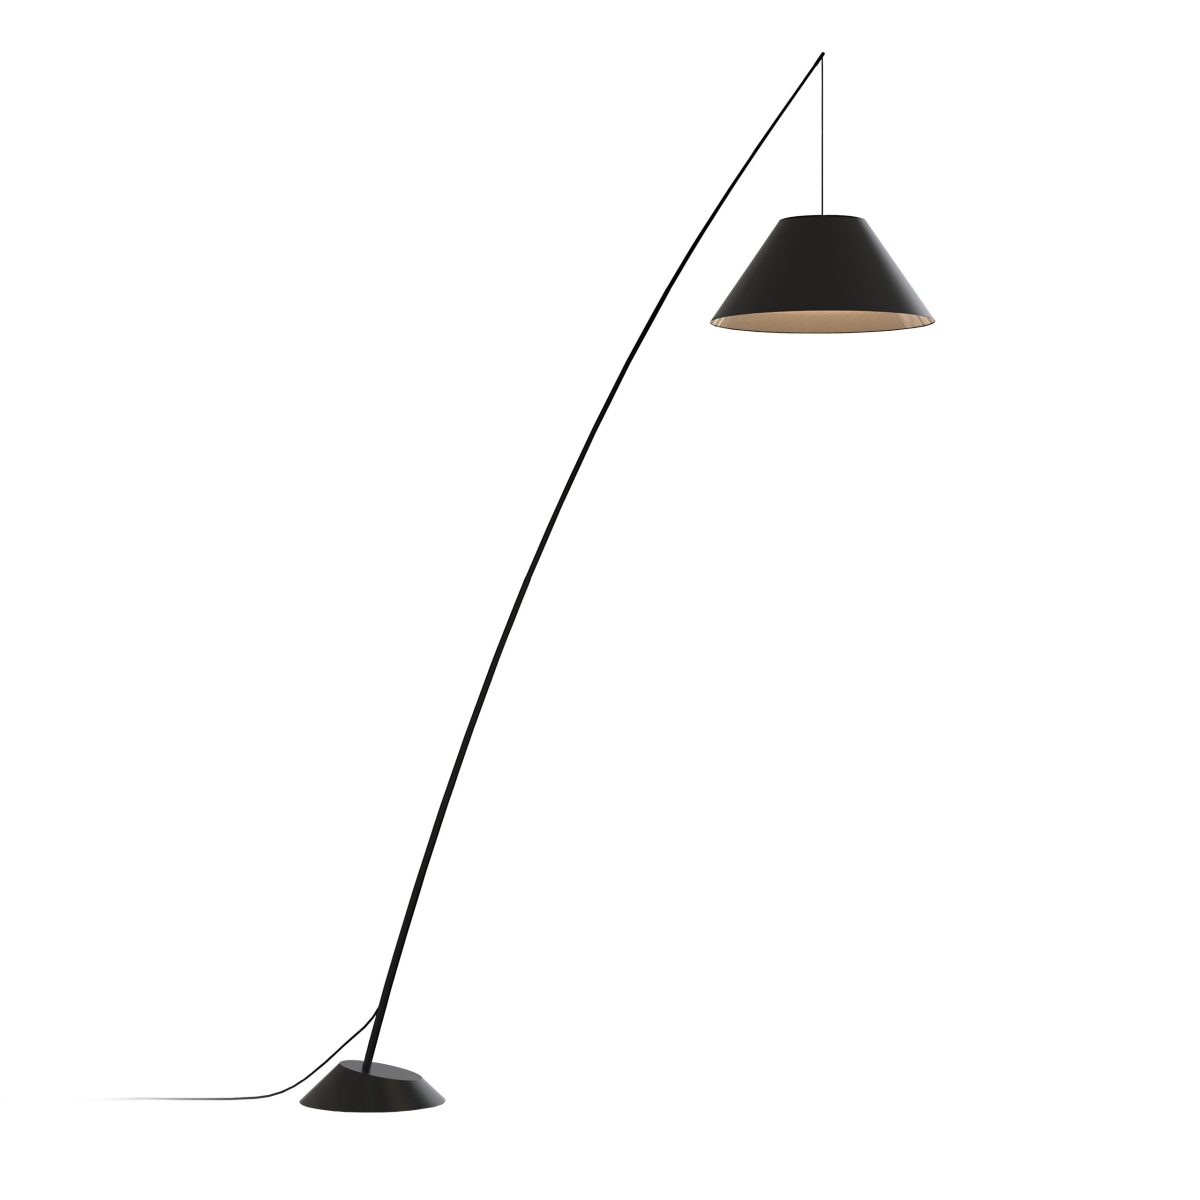 JUNCO Lámpara de pie de Schuller. Medidas: L 160 x A 235 (Amin 232, Amax 240) x F 55 cm. Color: Negro